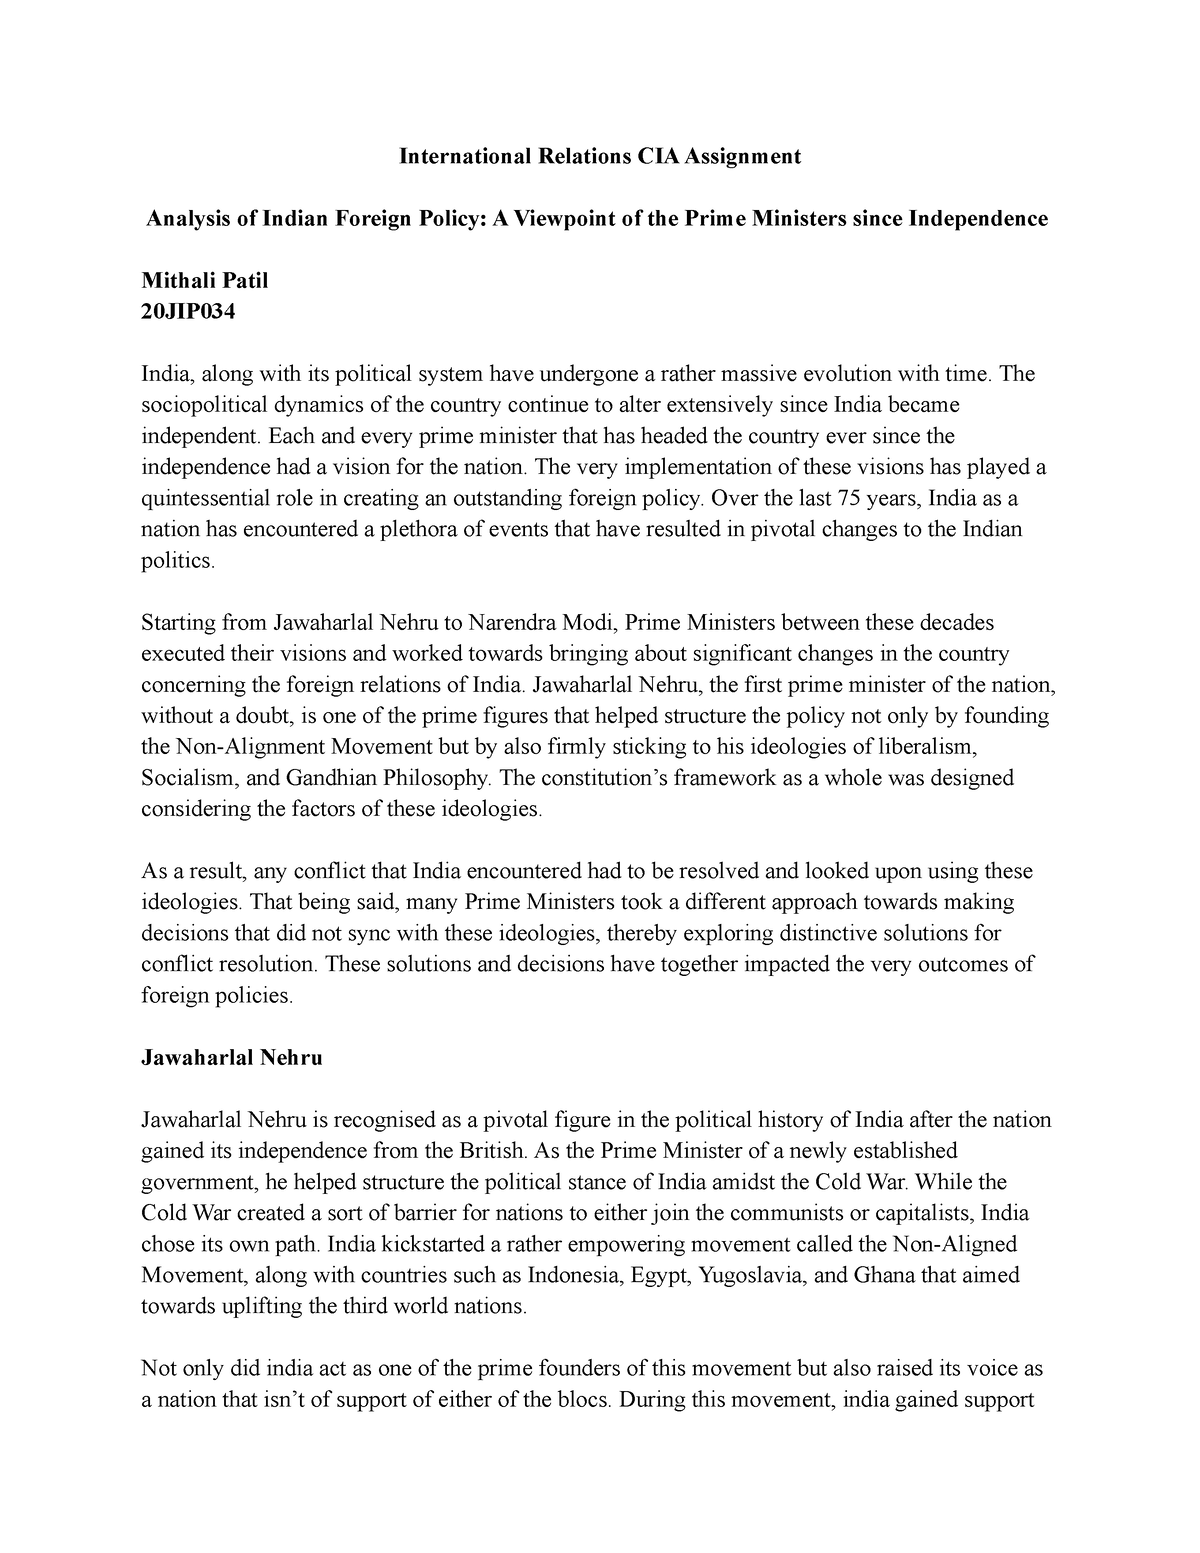 international relations assignment pdf